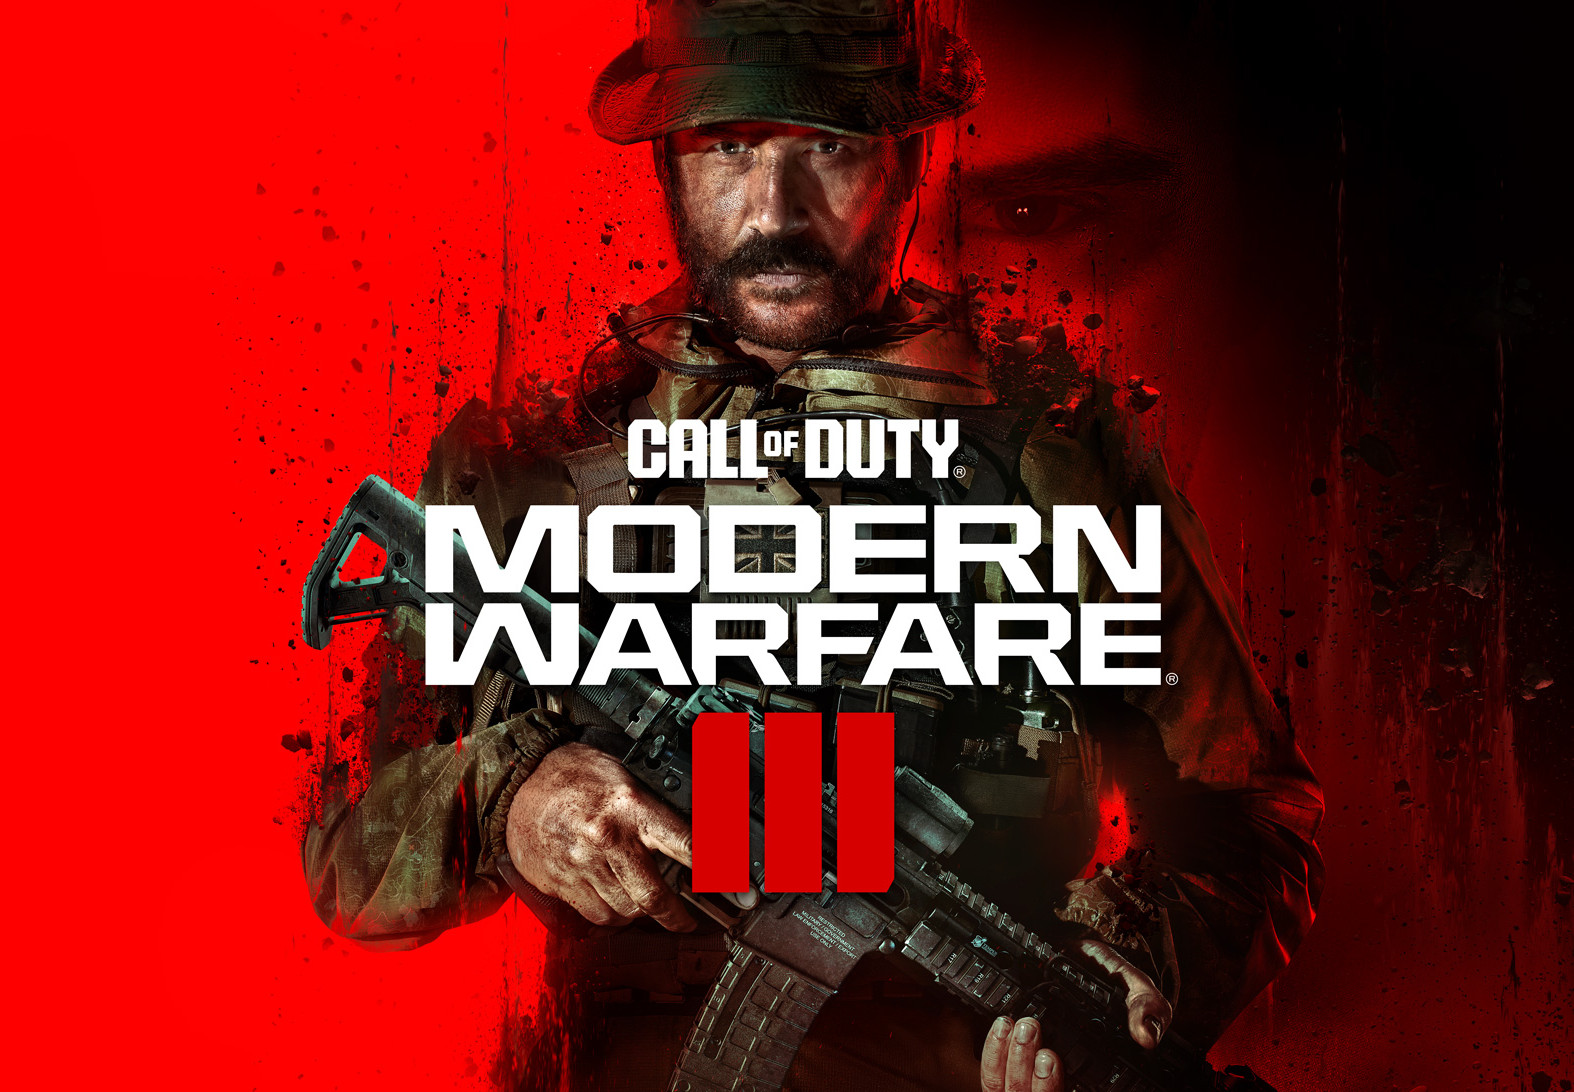 Call of Duty: Modern Warfare III PlayStation 4 Account pixelpuffin.net Activation Link